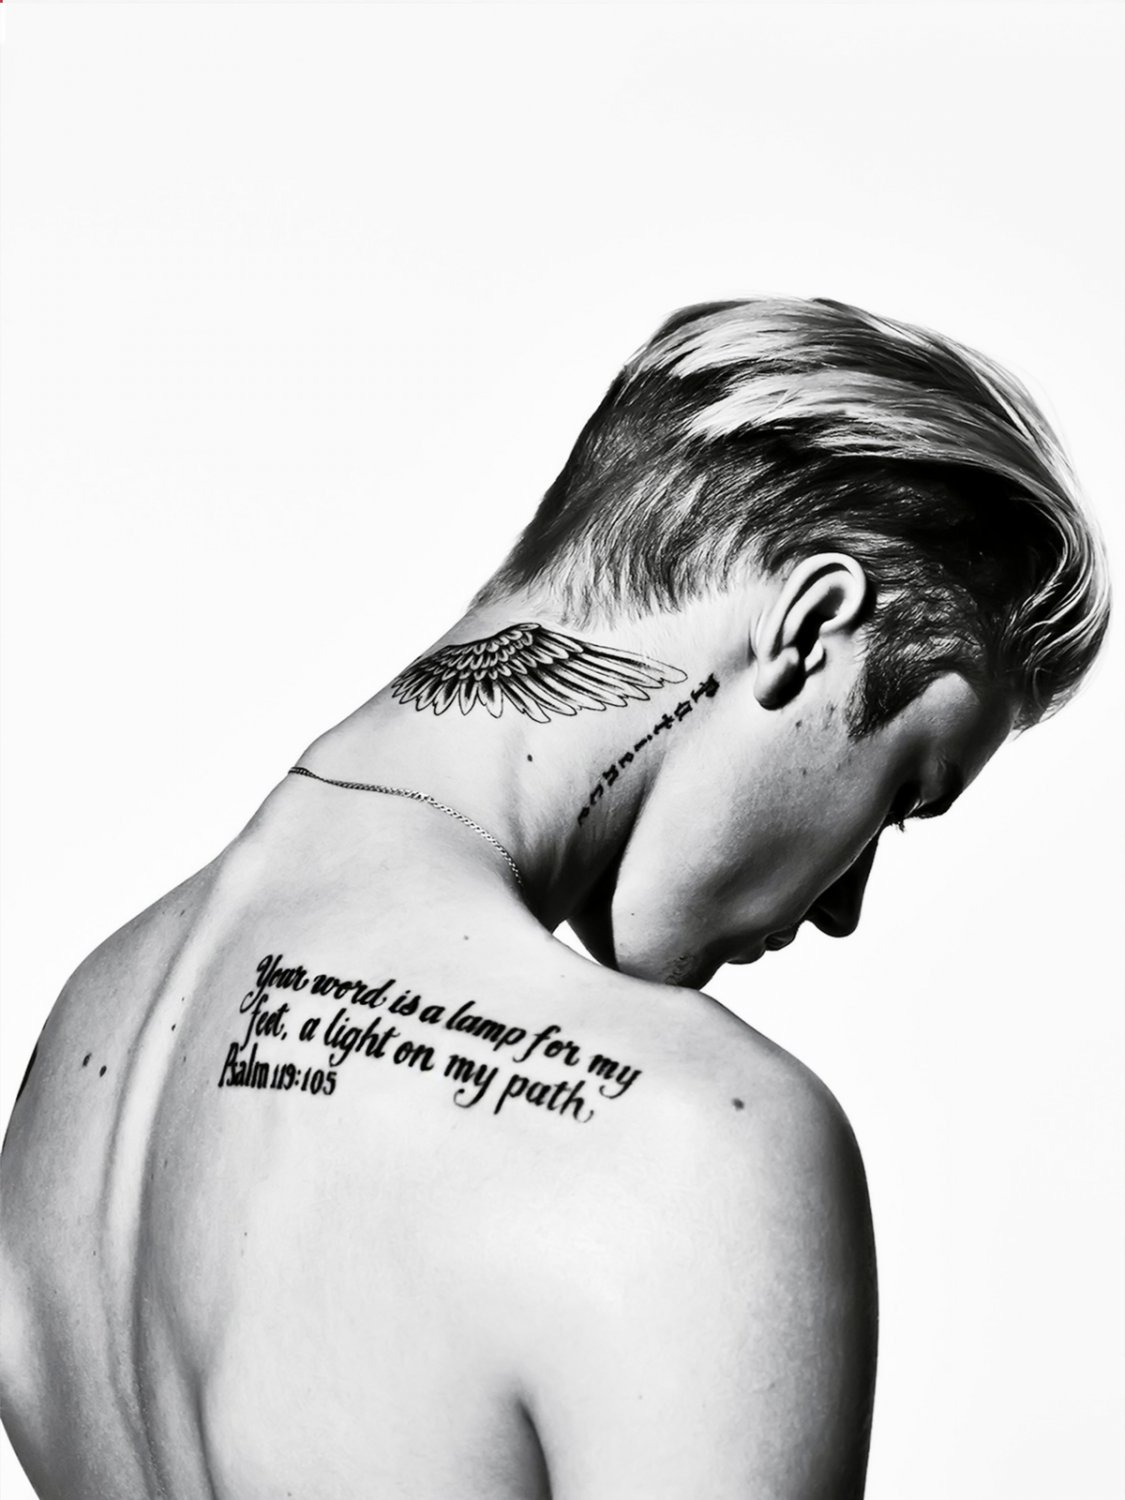 Justin Bieber   13"x19" (32cm/49cm) Poster